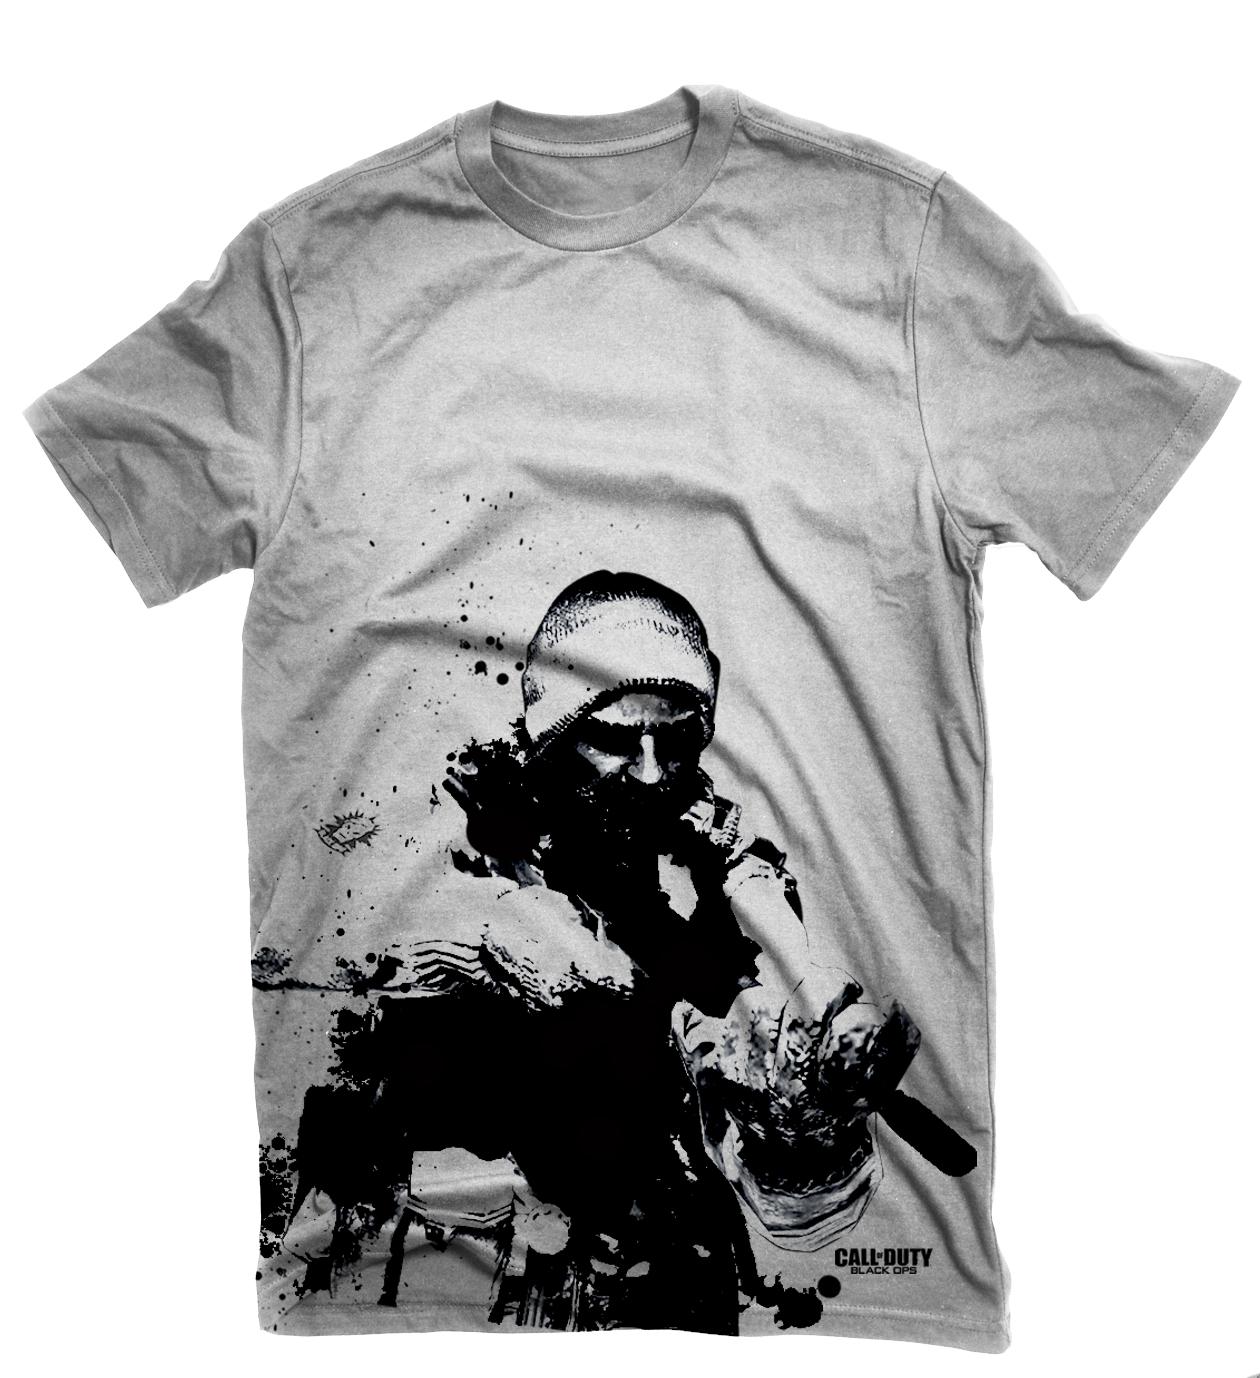 Foto Camiseta COD: Black Ops - Snow Soldier - Talla L foto 8653